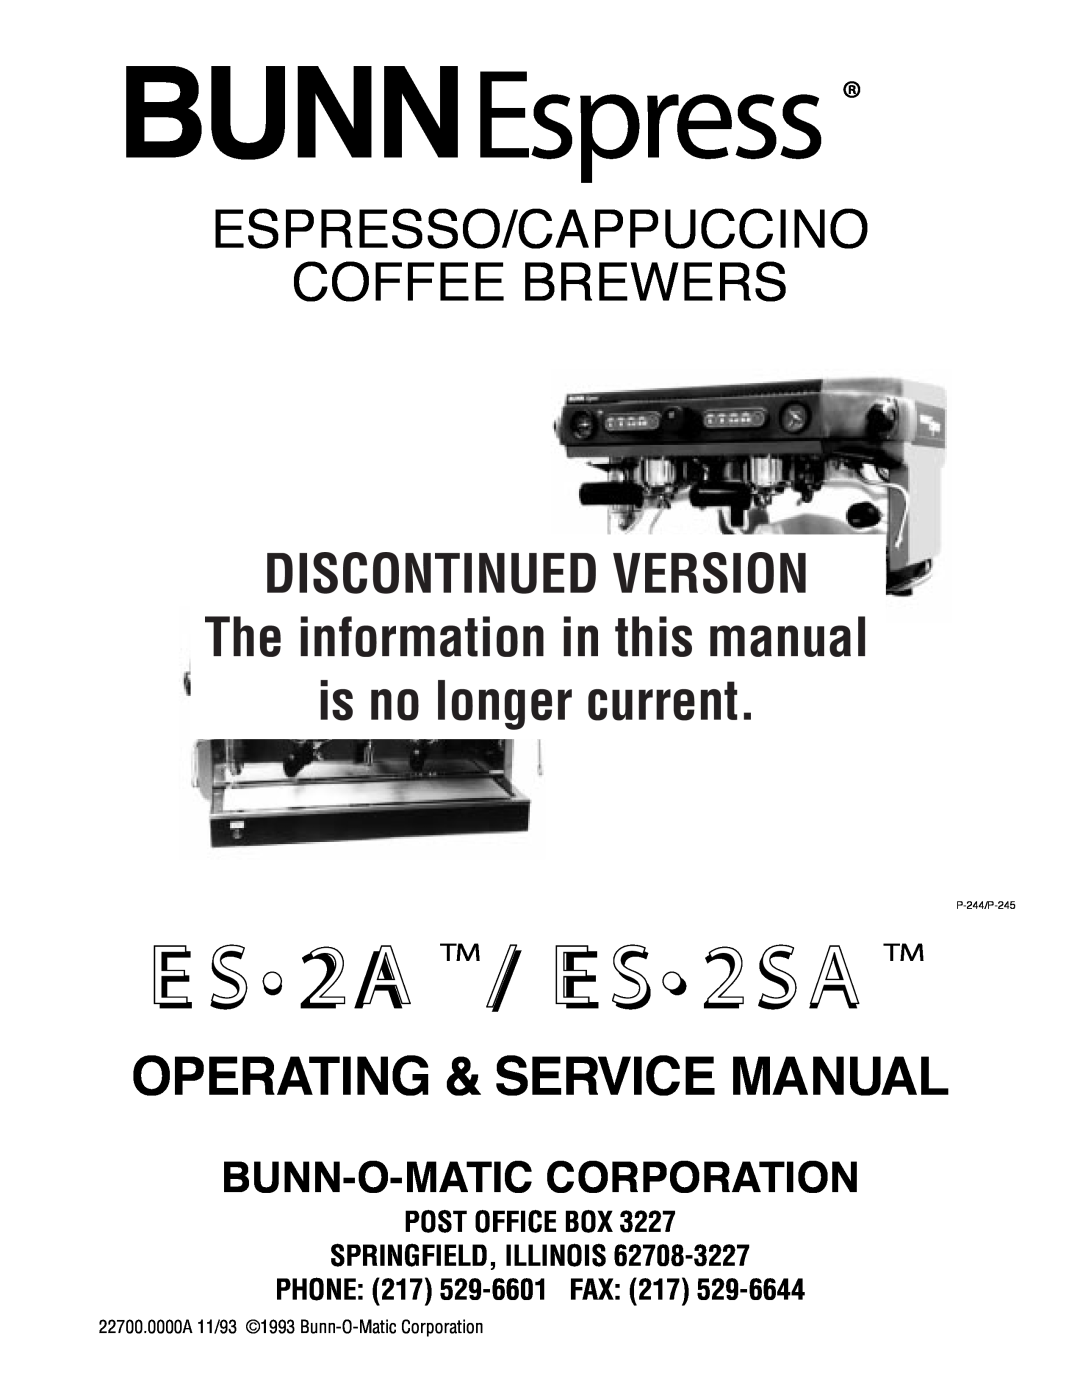 Bunn ES2SA service manual BUNNEspress, E S 2A TM / ES 2SA TM, Espresso/Cappuccino Coffee Brewers, is no longer current 